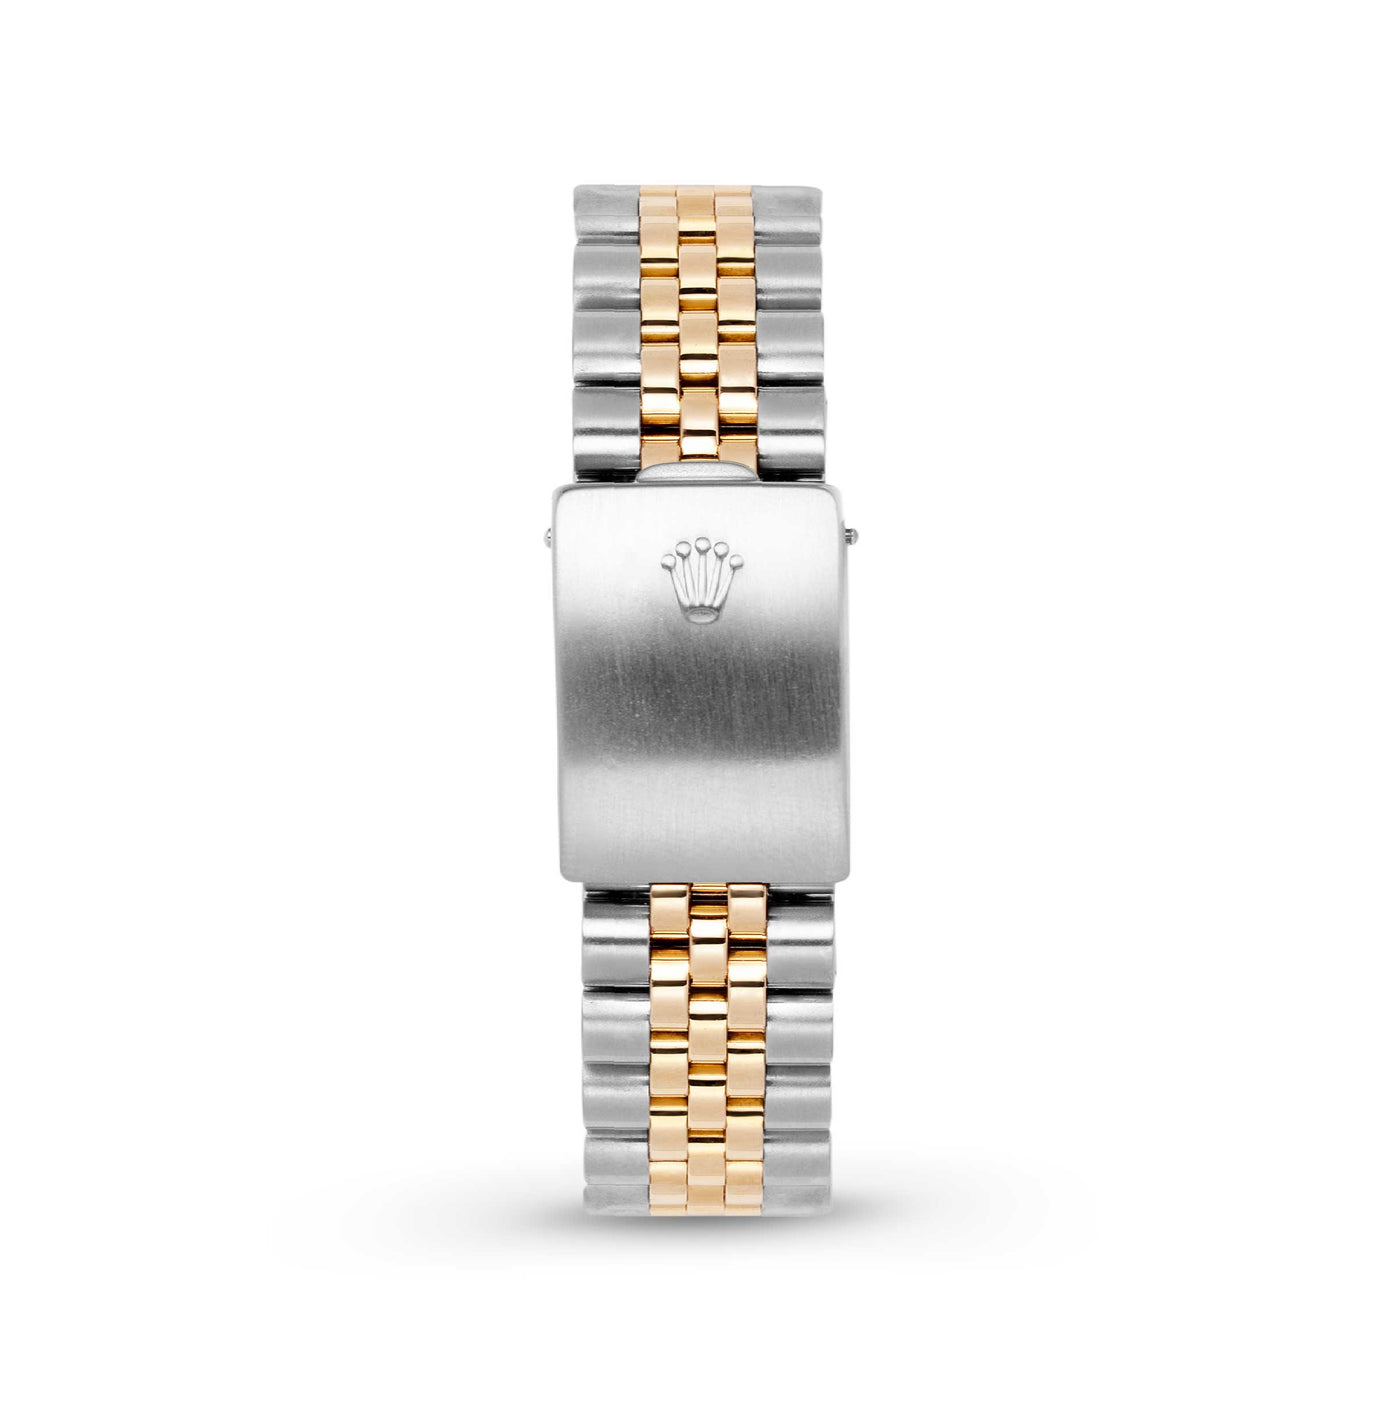 Rolex Datejust Diamond Bezel Watch 36mm Dark Green Roman Dial | 2.25ct